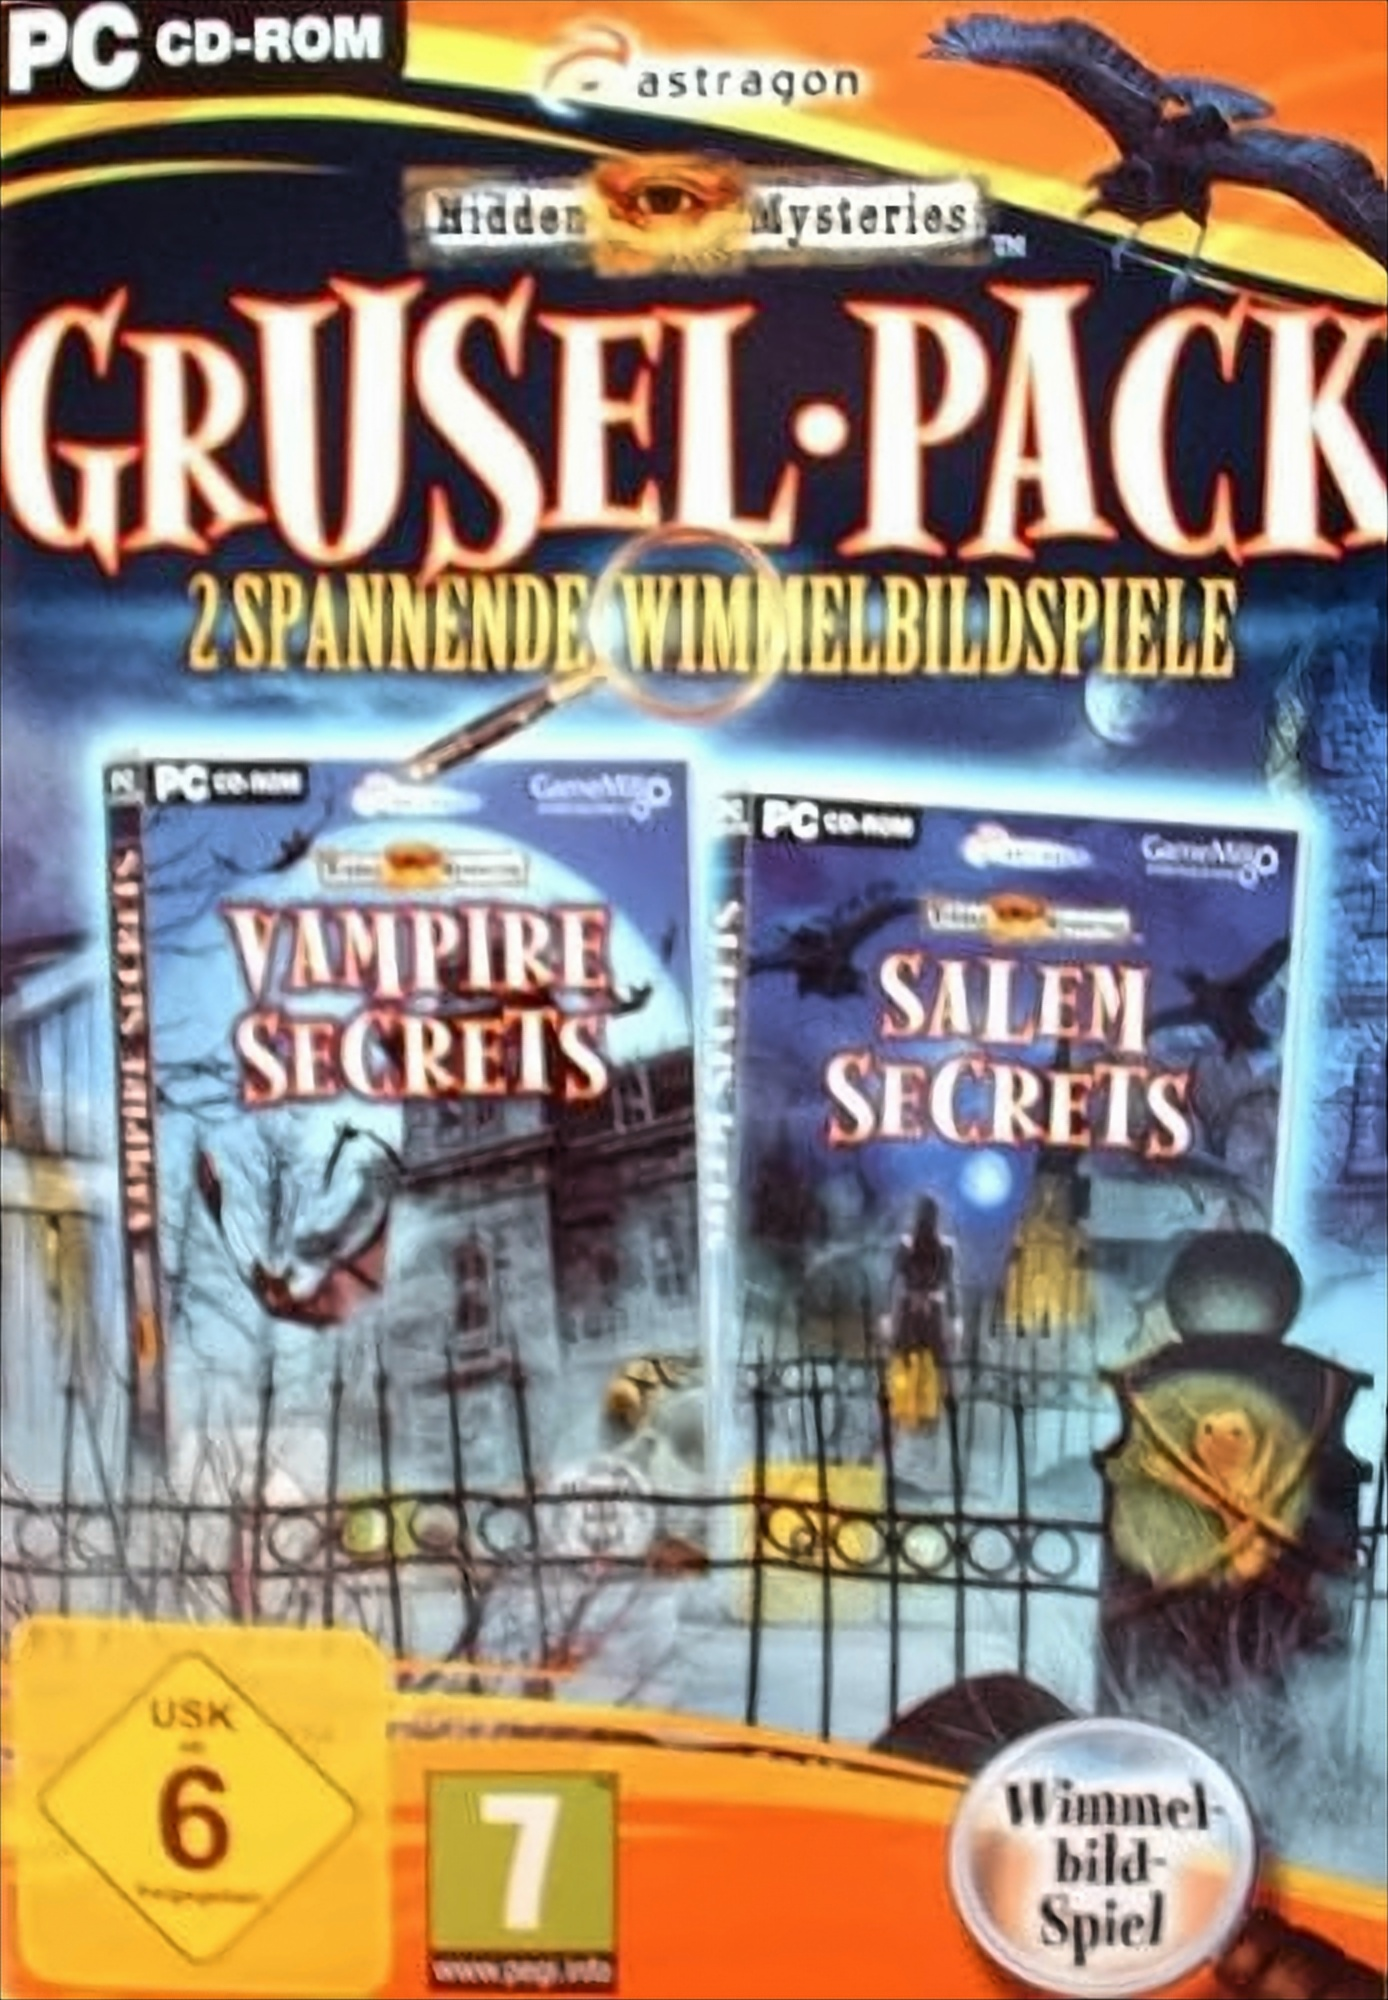 Salem Secrets) - Secrets, Hidden Mysteries Gruselpack (Vampire [PC]